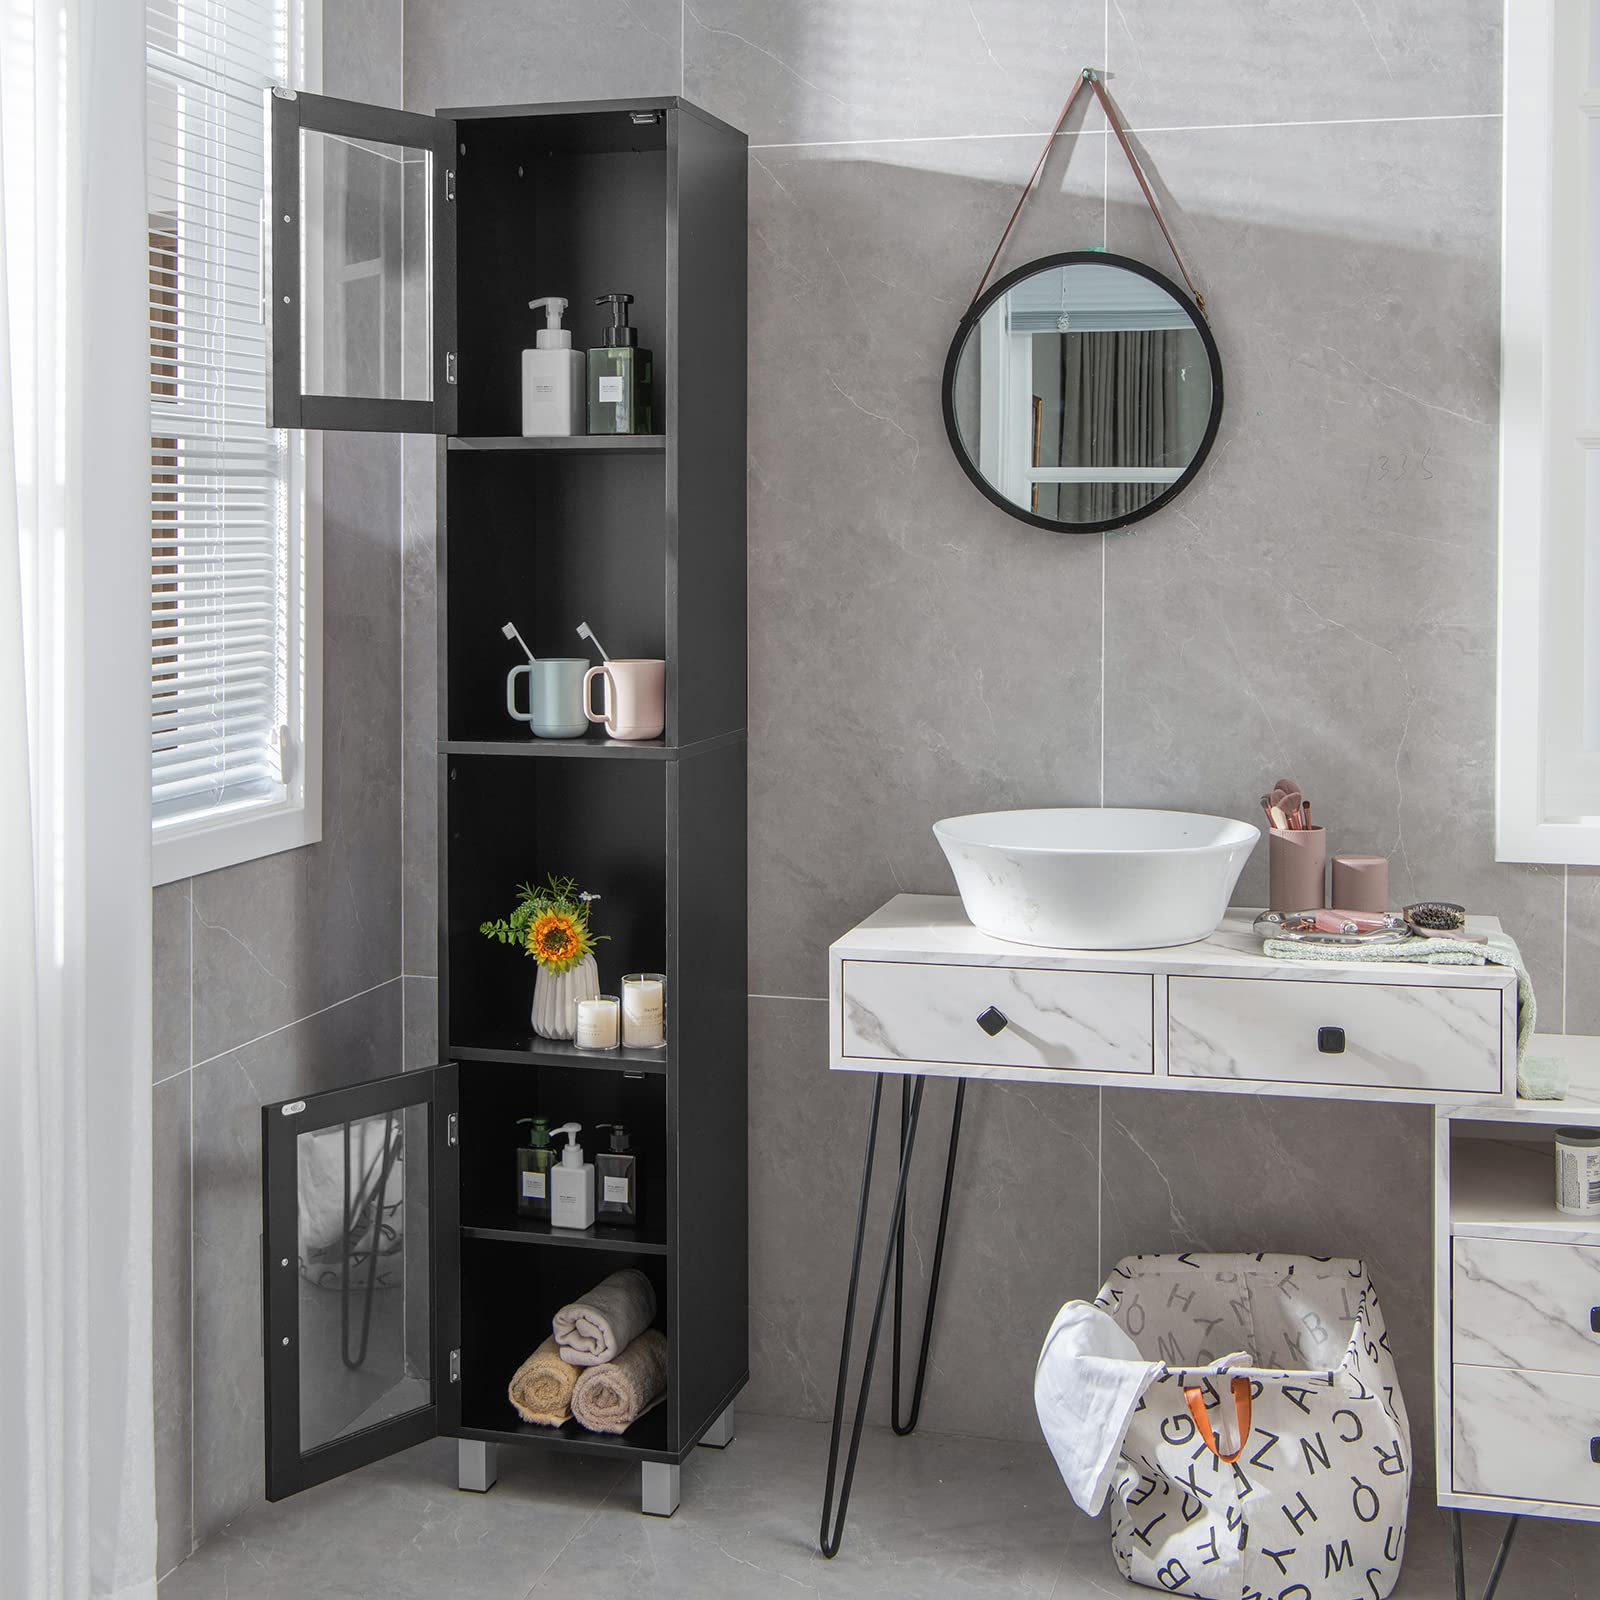 Giantex High Storage Bathroom Cabinet, Freestanding Slim Organizer, Linen Tower Narrow Floor Cabinet, Black